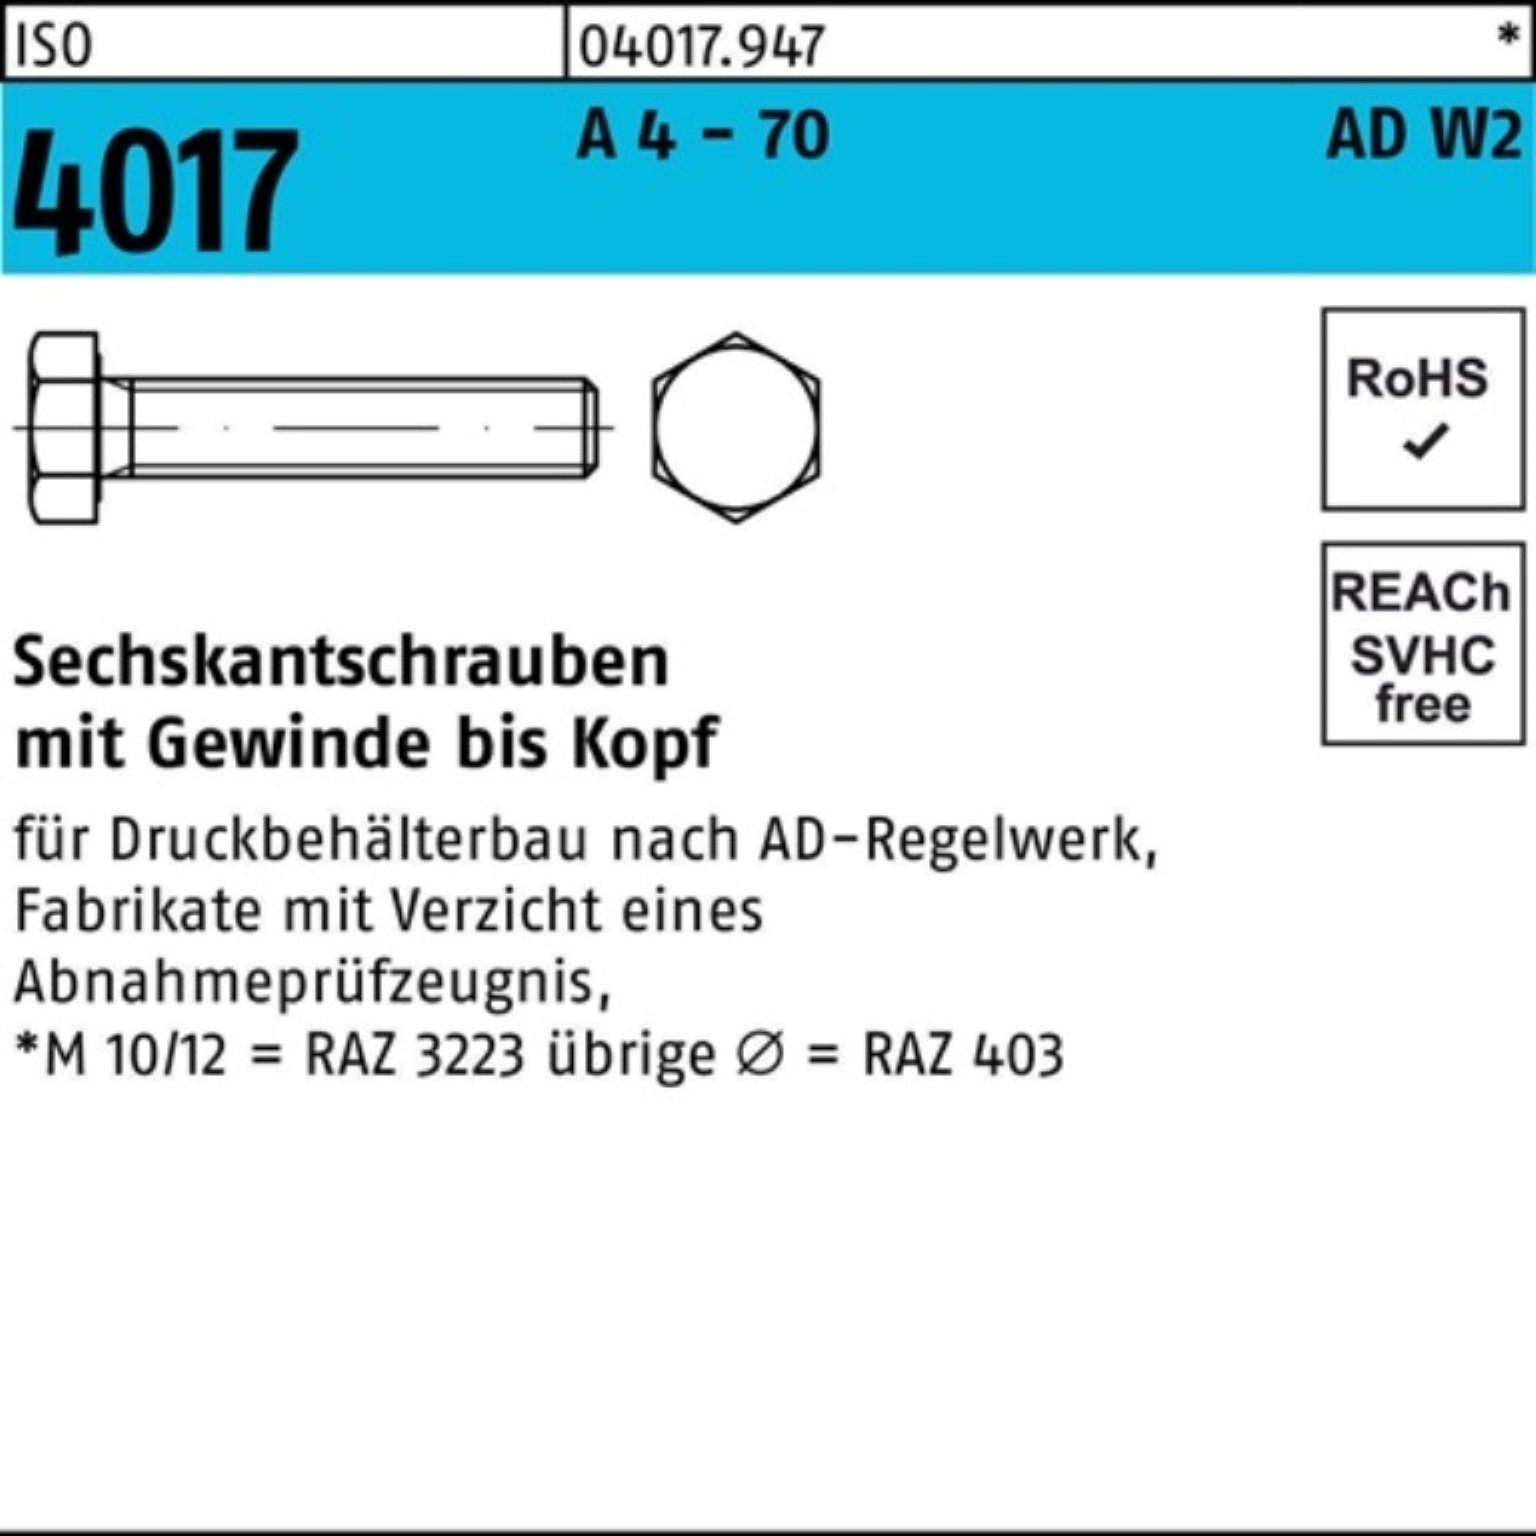 Bufab Sechskantschraube 100er Pack Sechskantschraube ISO 4017 VG M12x 40 A 4 - 70 AD-W2 50 St